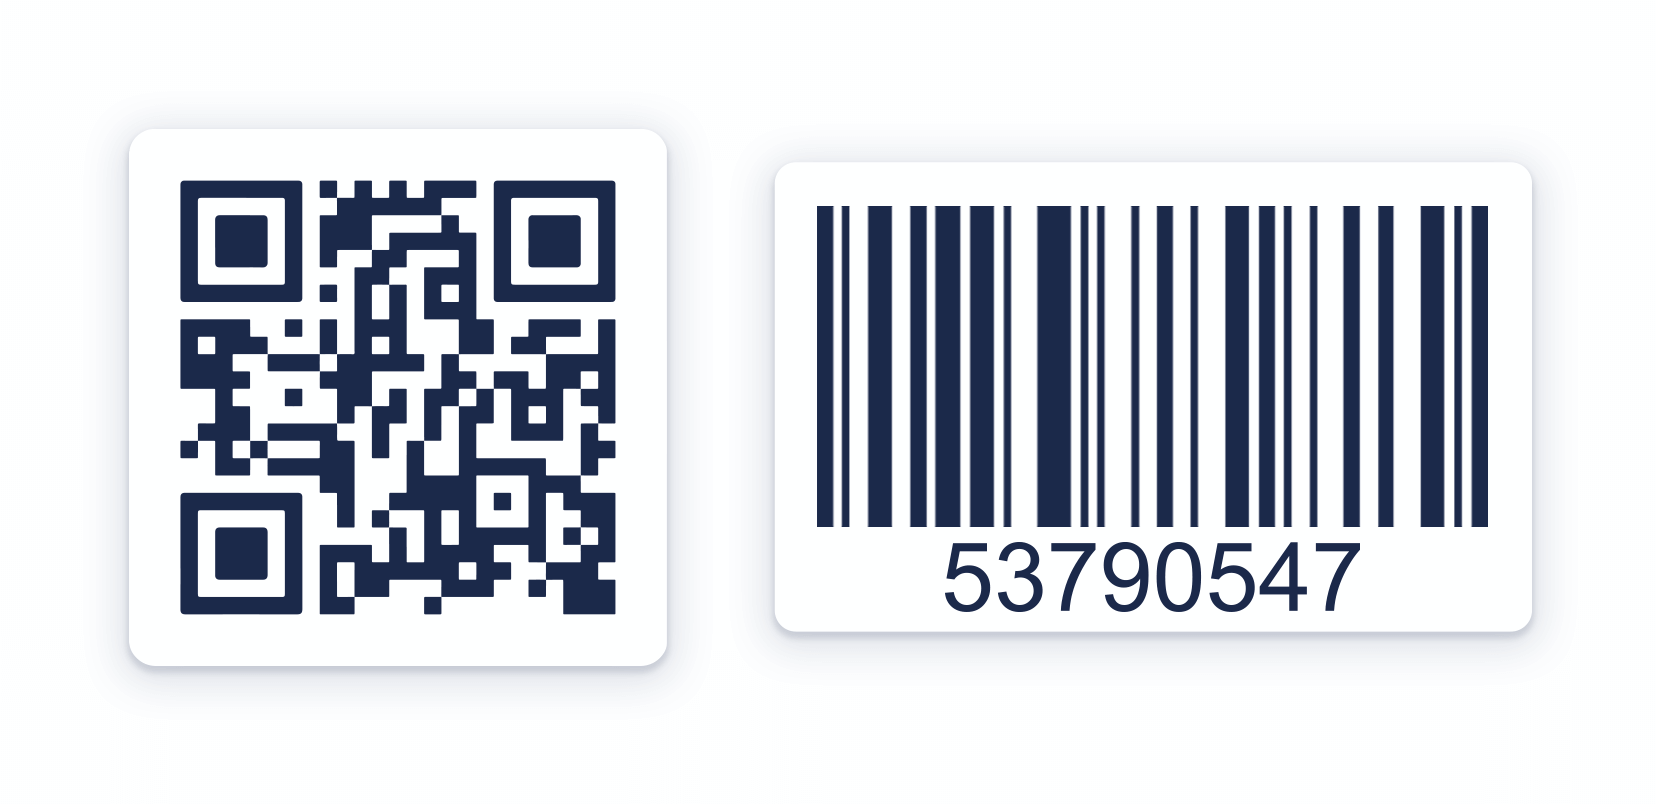 02-blog-how-qr-codes-work-qr-codes-vs-barcodes